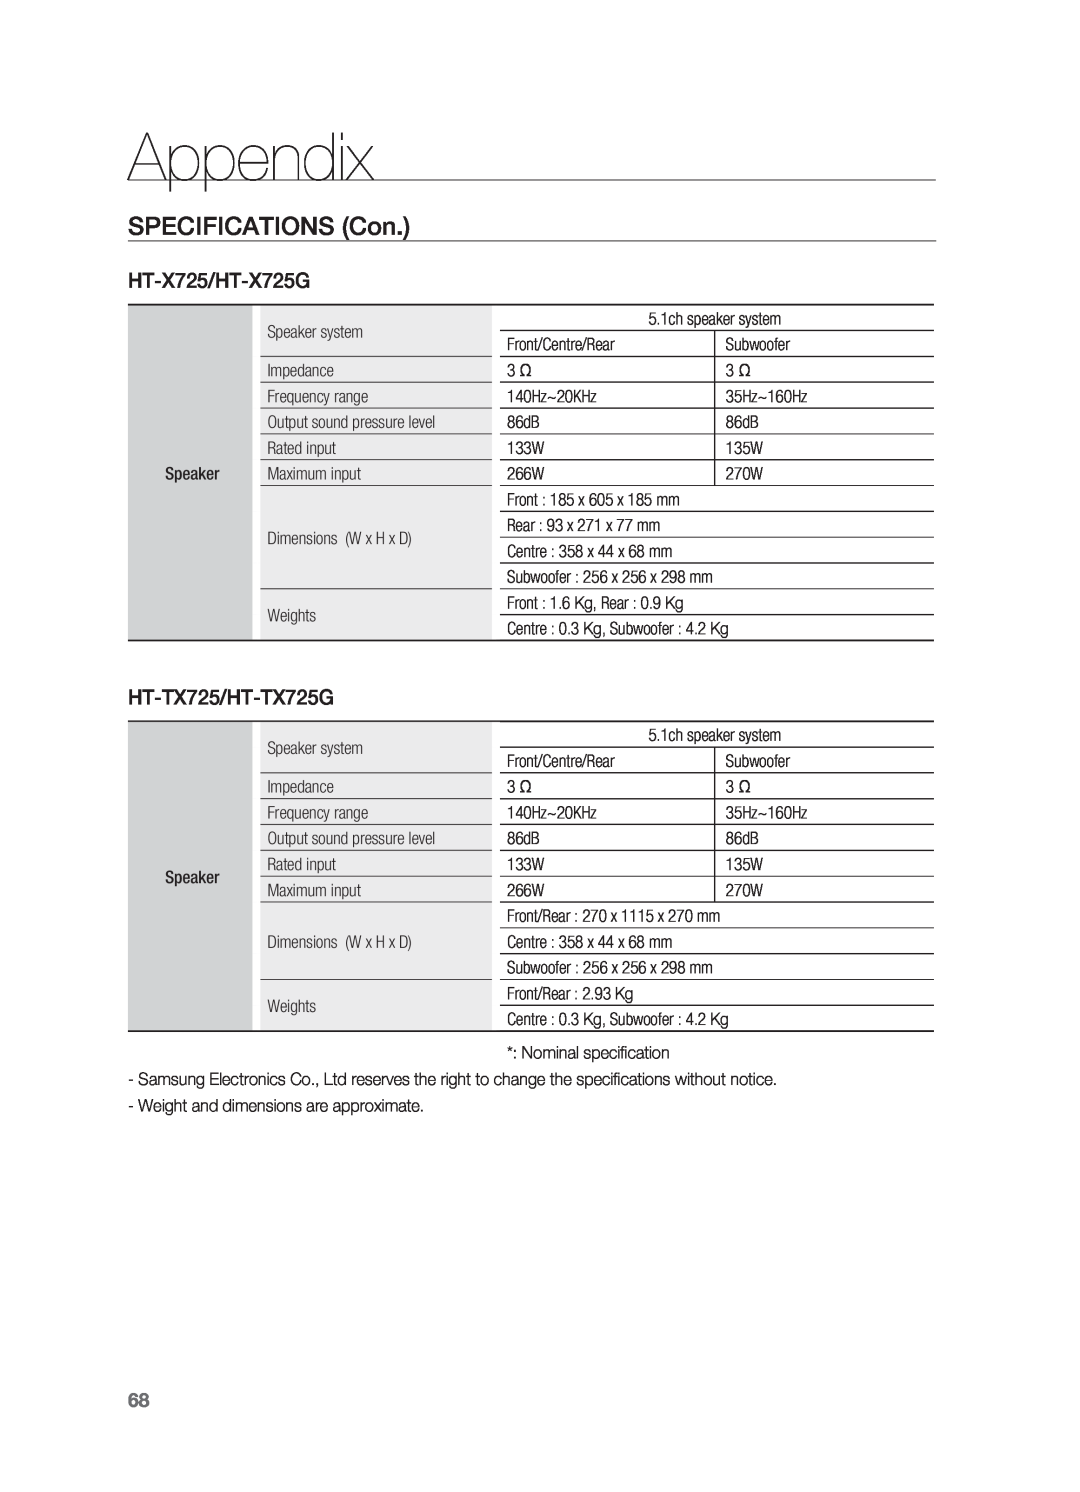 Samsung user manual Specifications Con, Appendix, HT-X725/HT-X725G, HT-TX725/HT-TX725G 